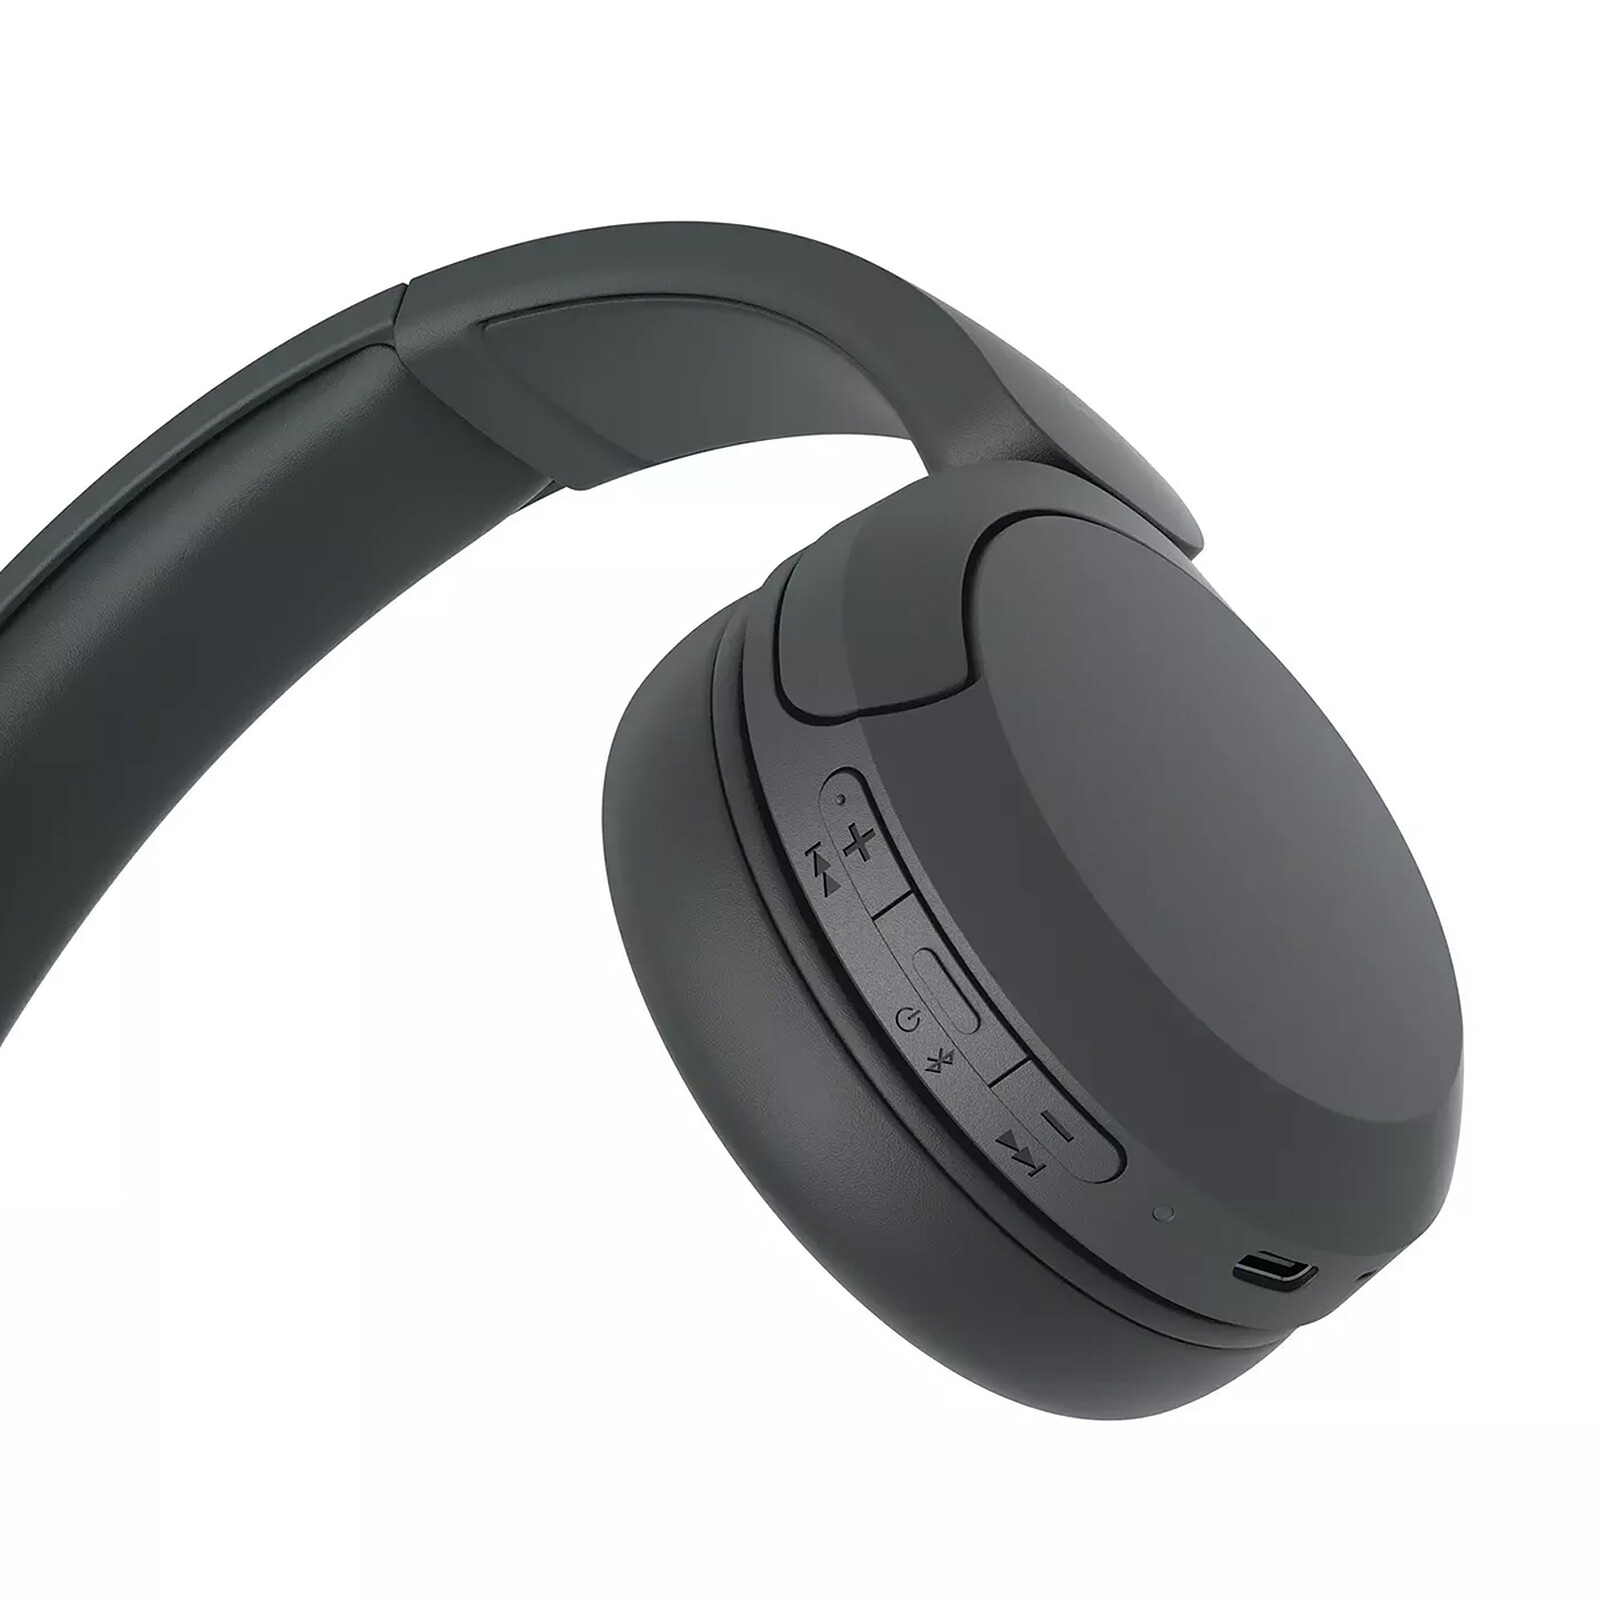 Sony Wireless Noise Canceling Headphone, Black